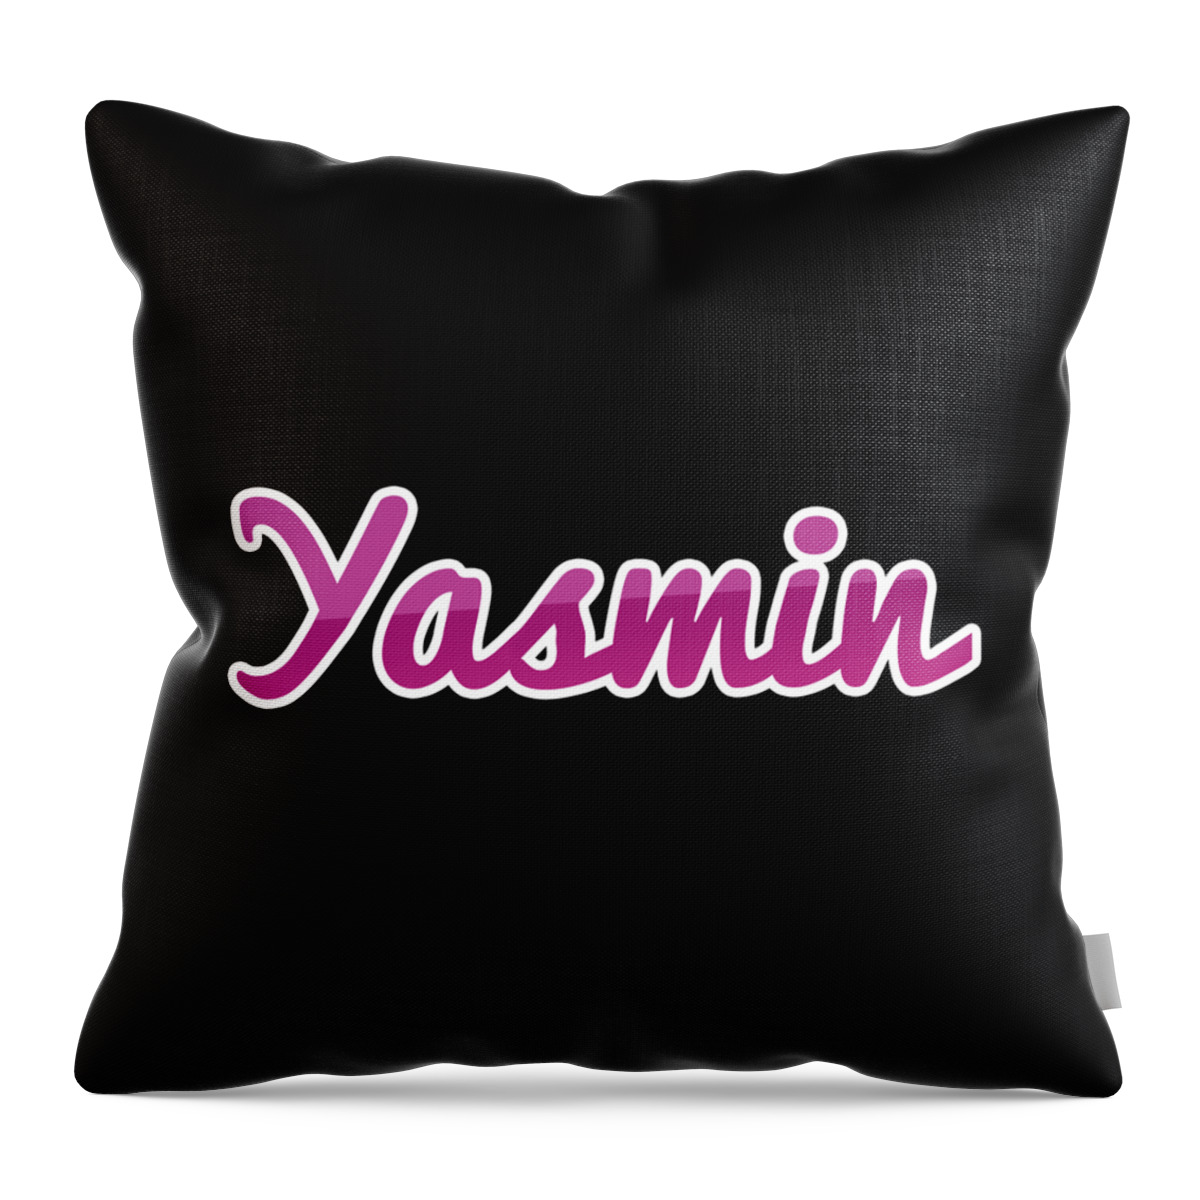 Yasmin Throw Pillow featuring the digital art Yasmin #Yasmin by Tinto Designs